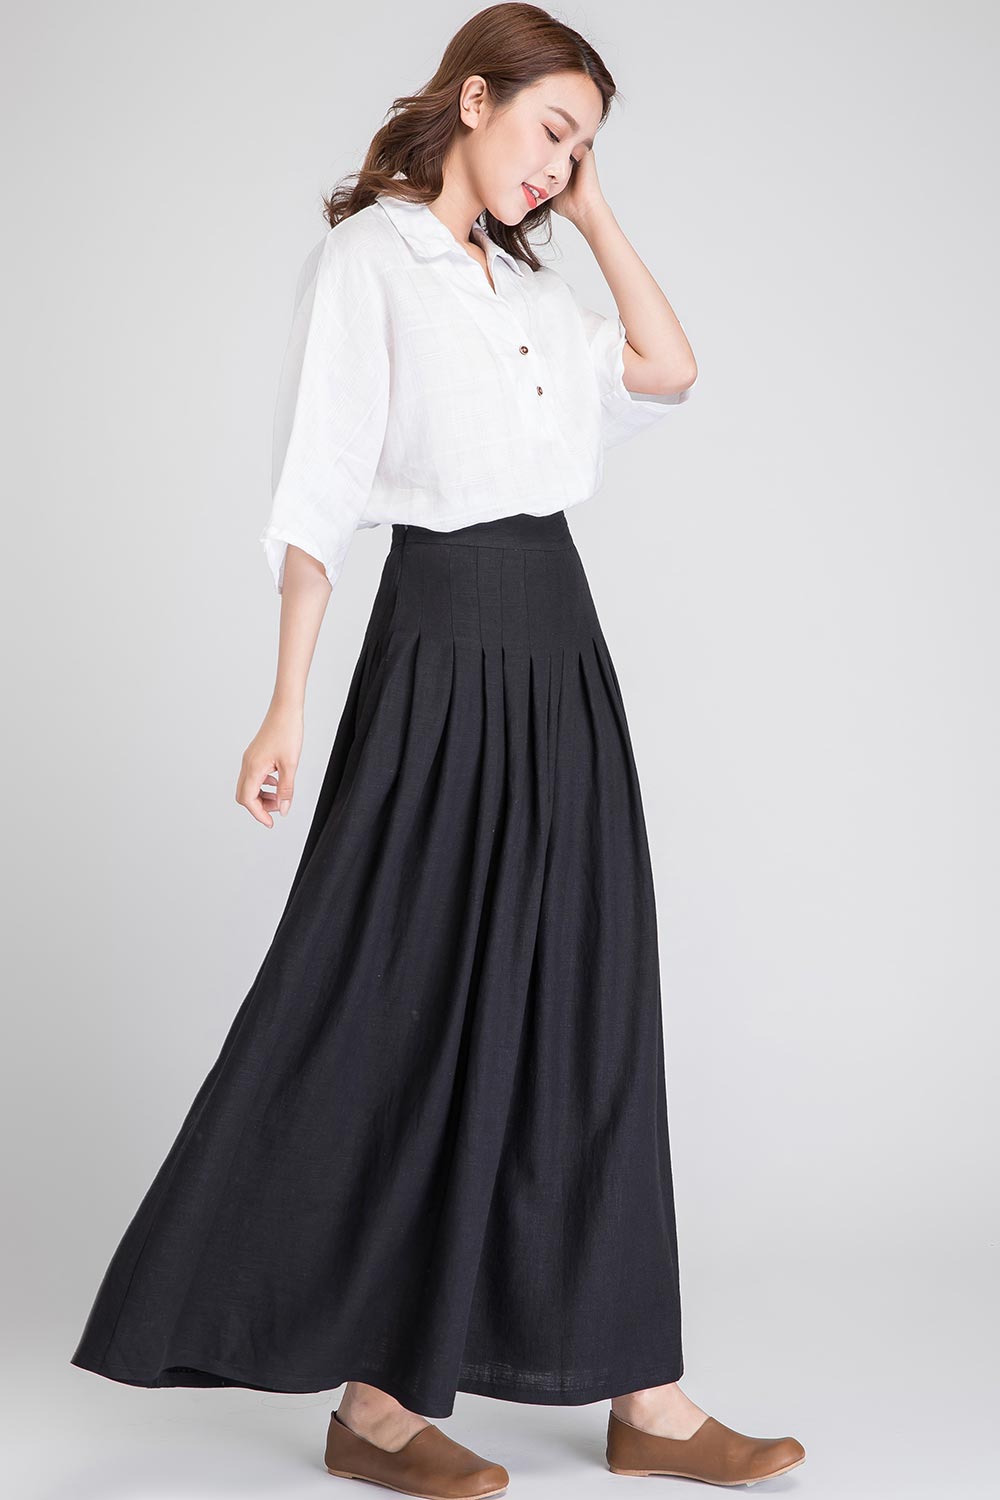 Black linen maxi skirt 1890